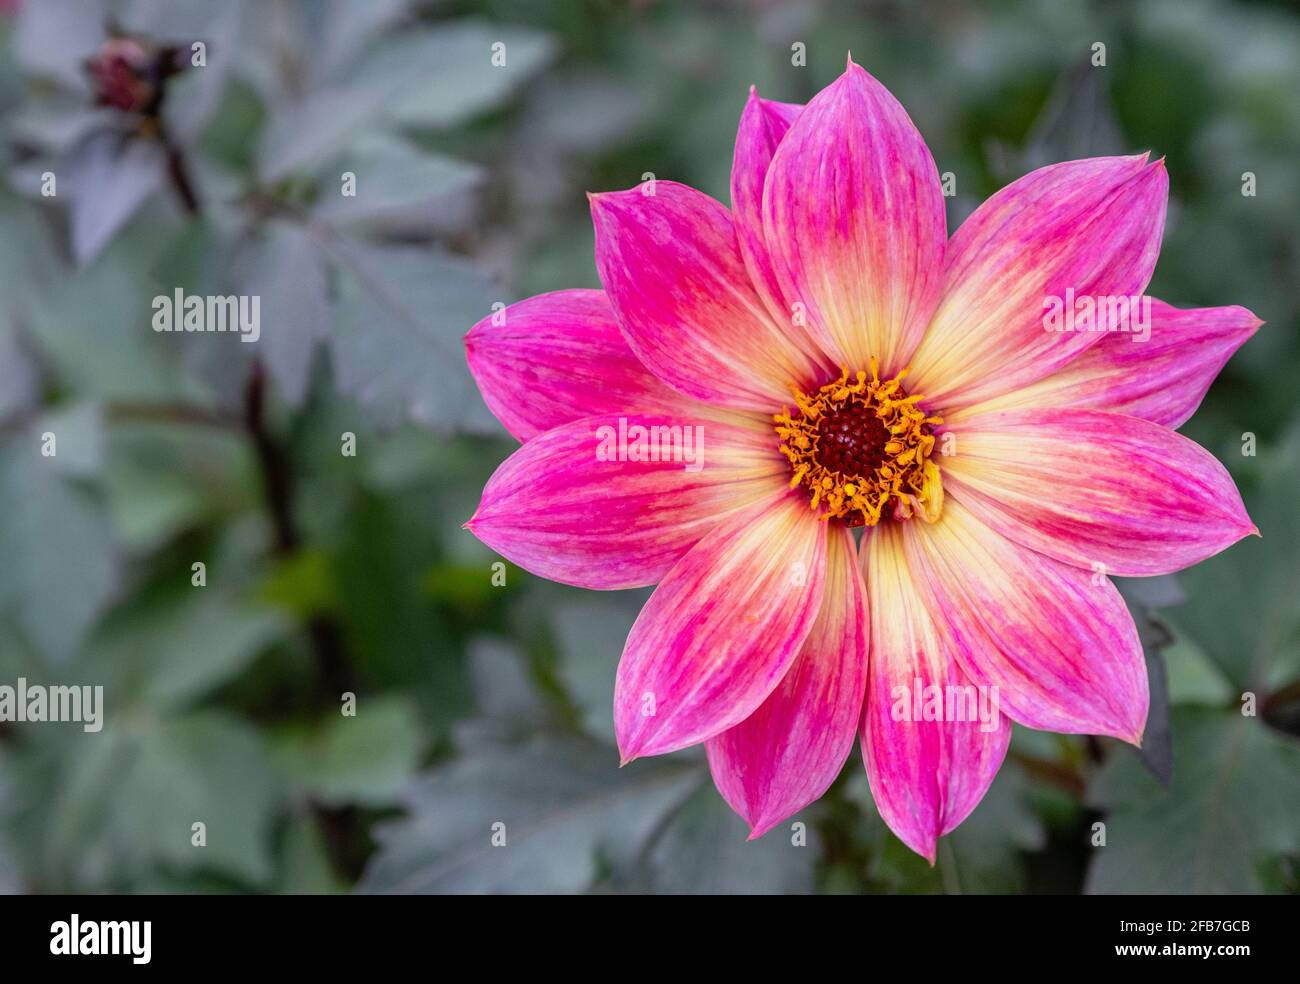 Dahlia, Dahlia Australis, Close-up opf pink coloured flower showing petals and stamen. Stock Photo